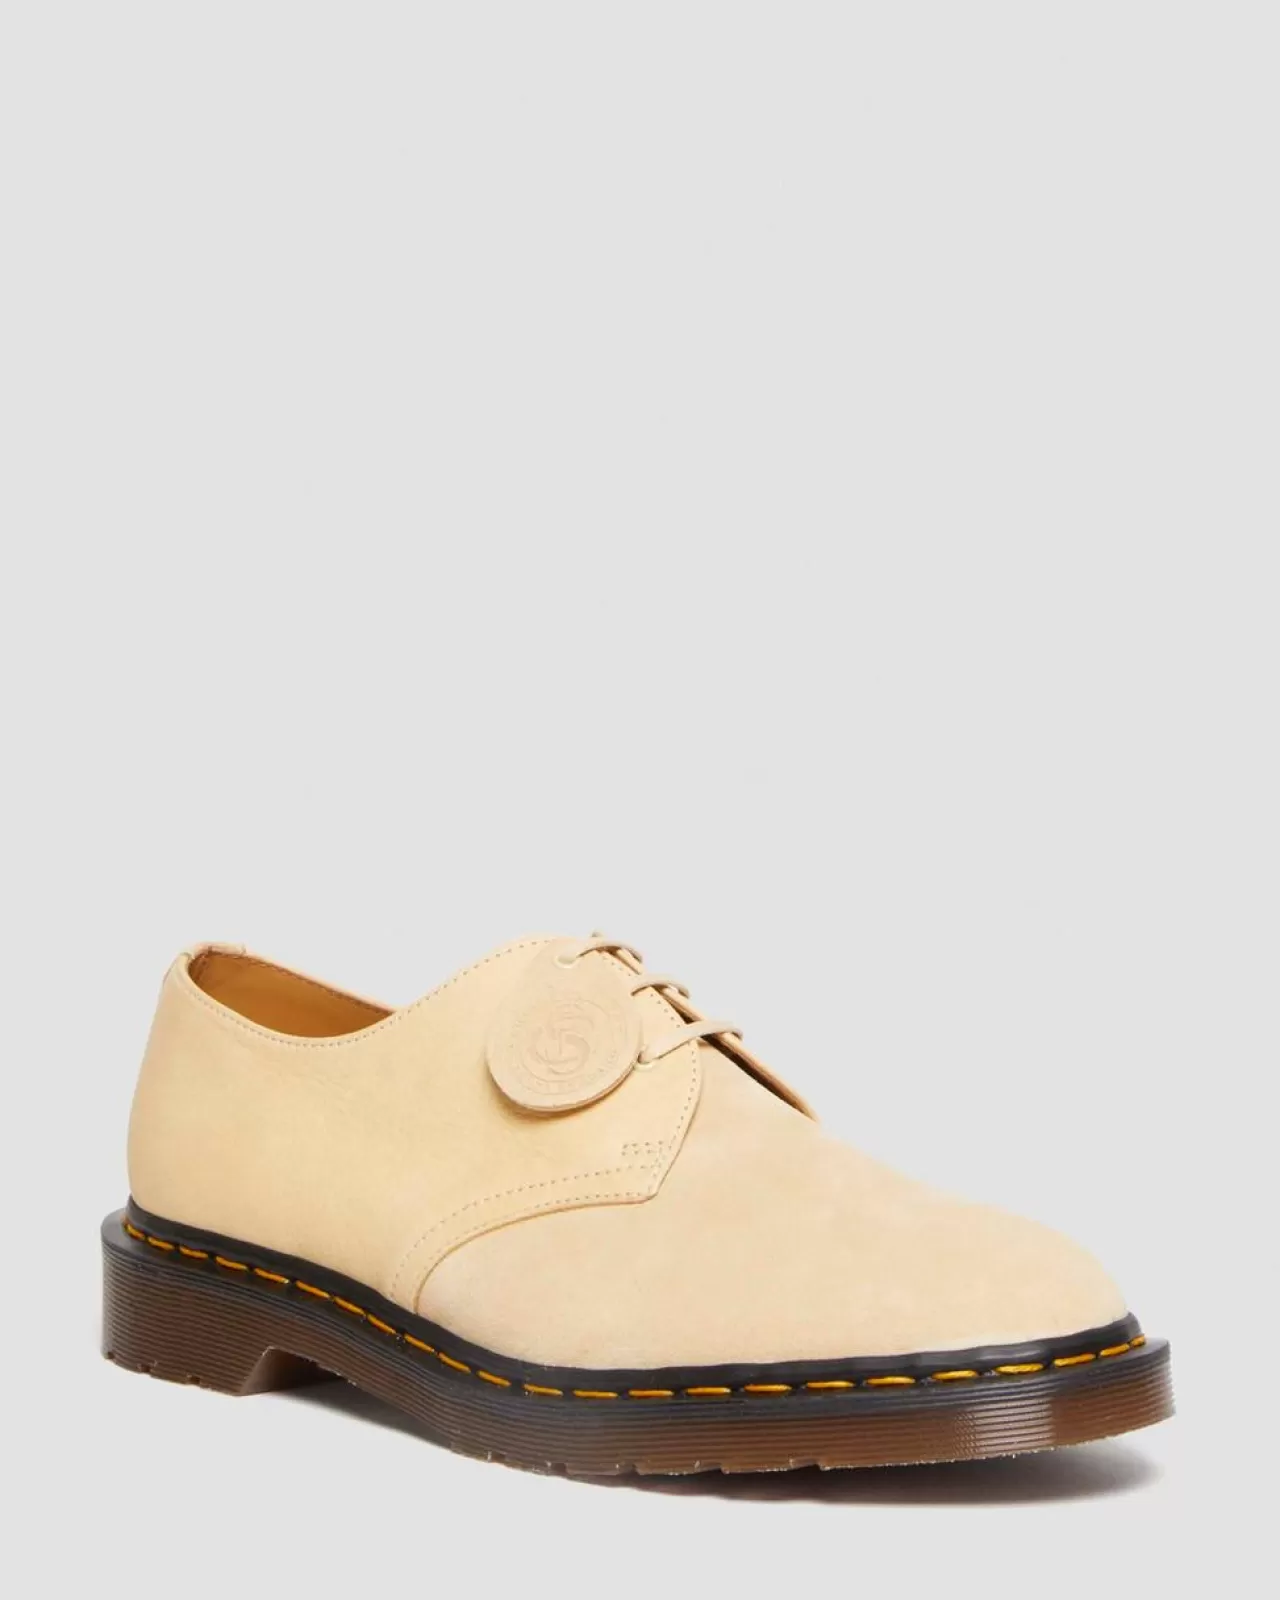 Sale | Originals^Dr. Martens 1461 Made in England Suede Oxford Shoes Mustard — Reverse Grain Suede